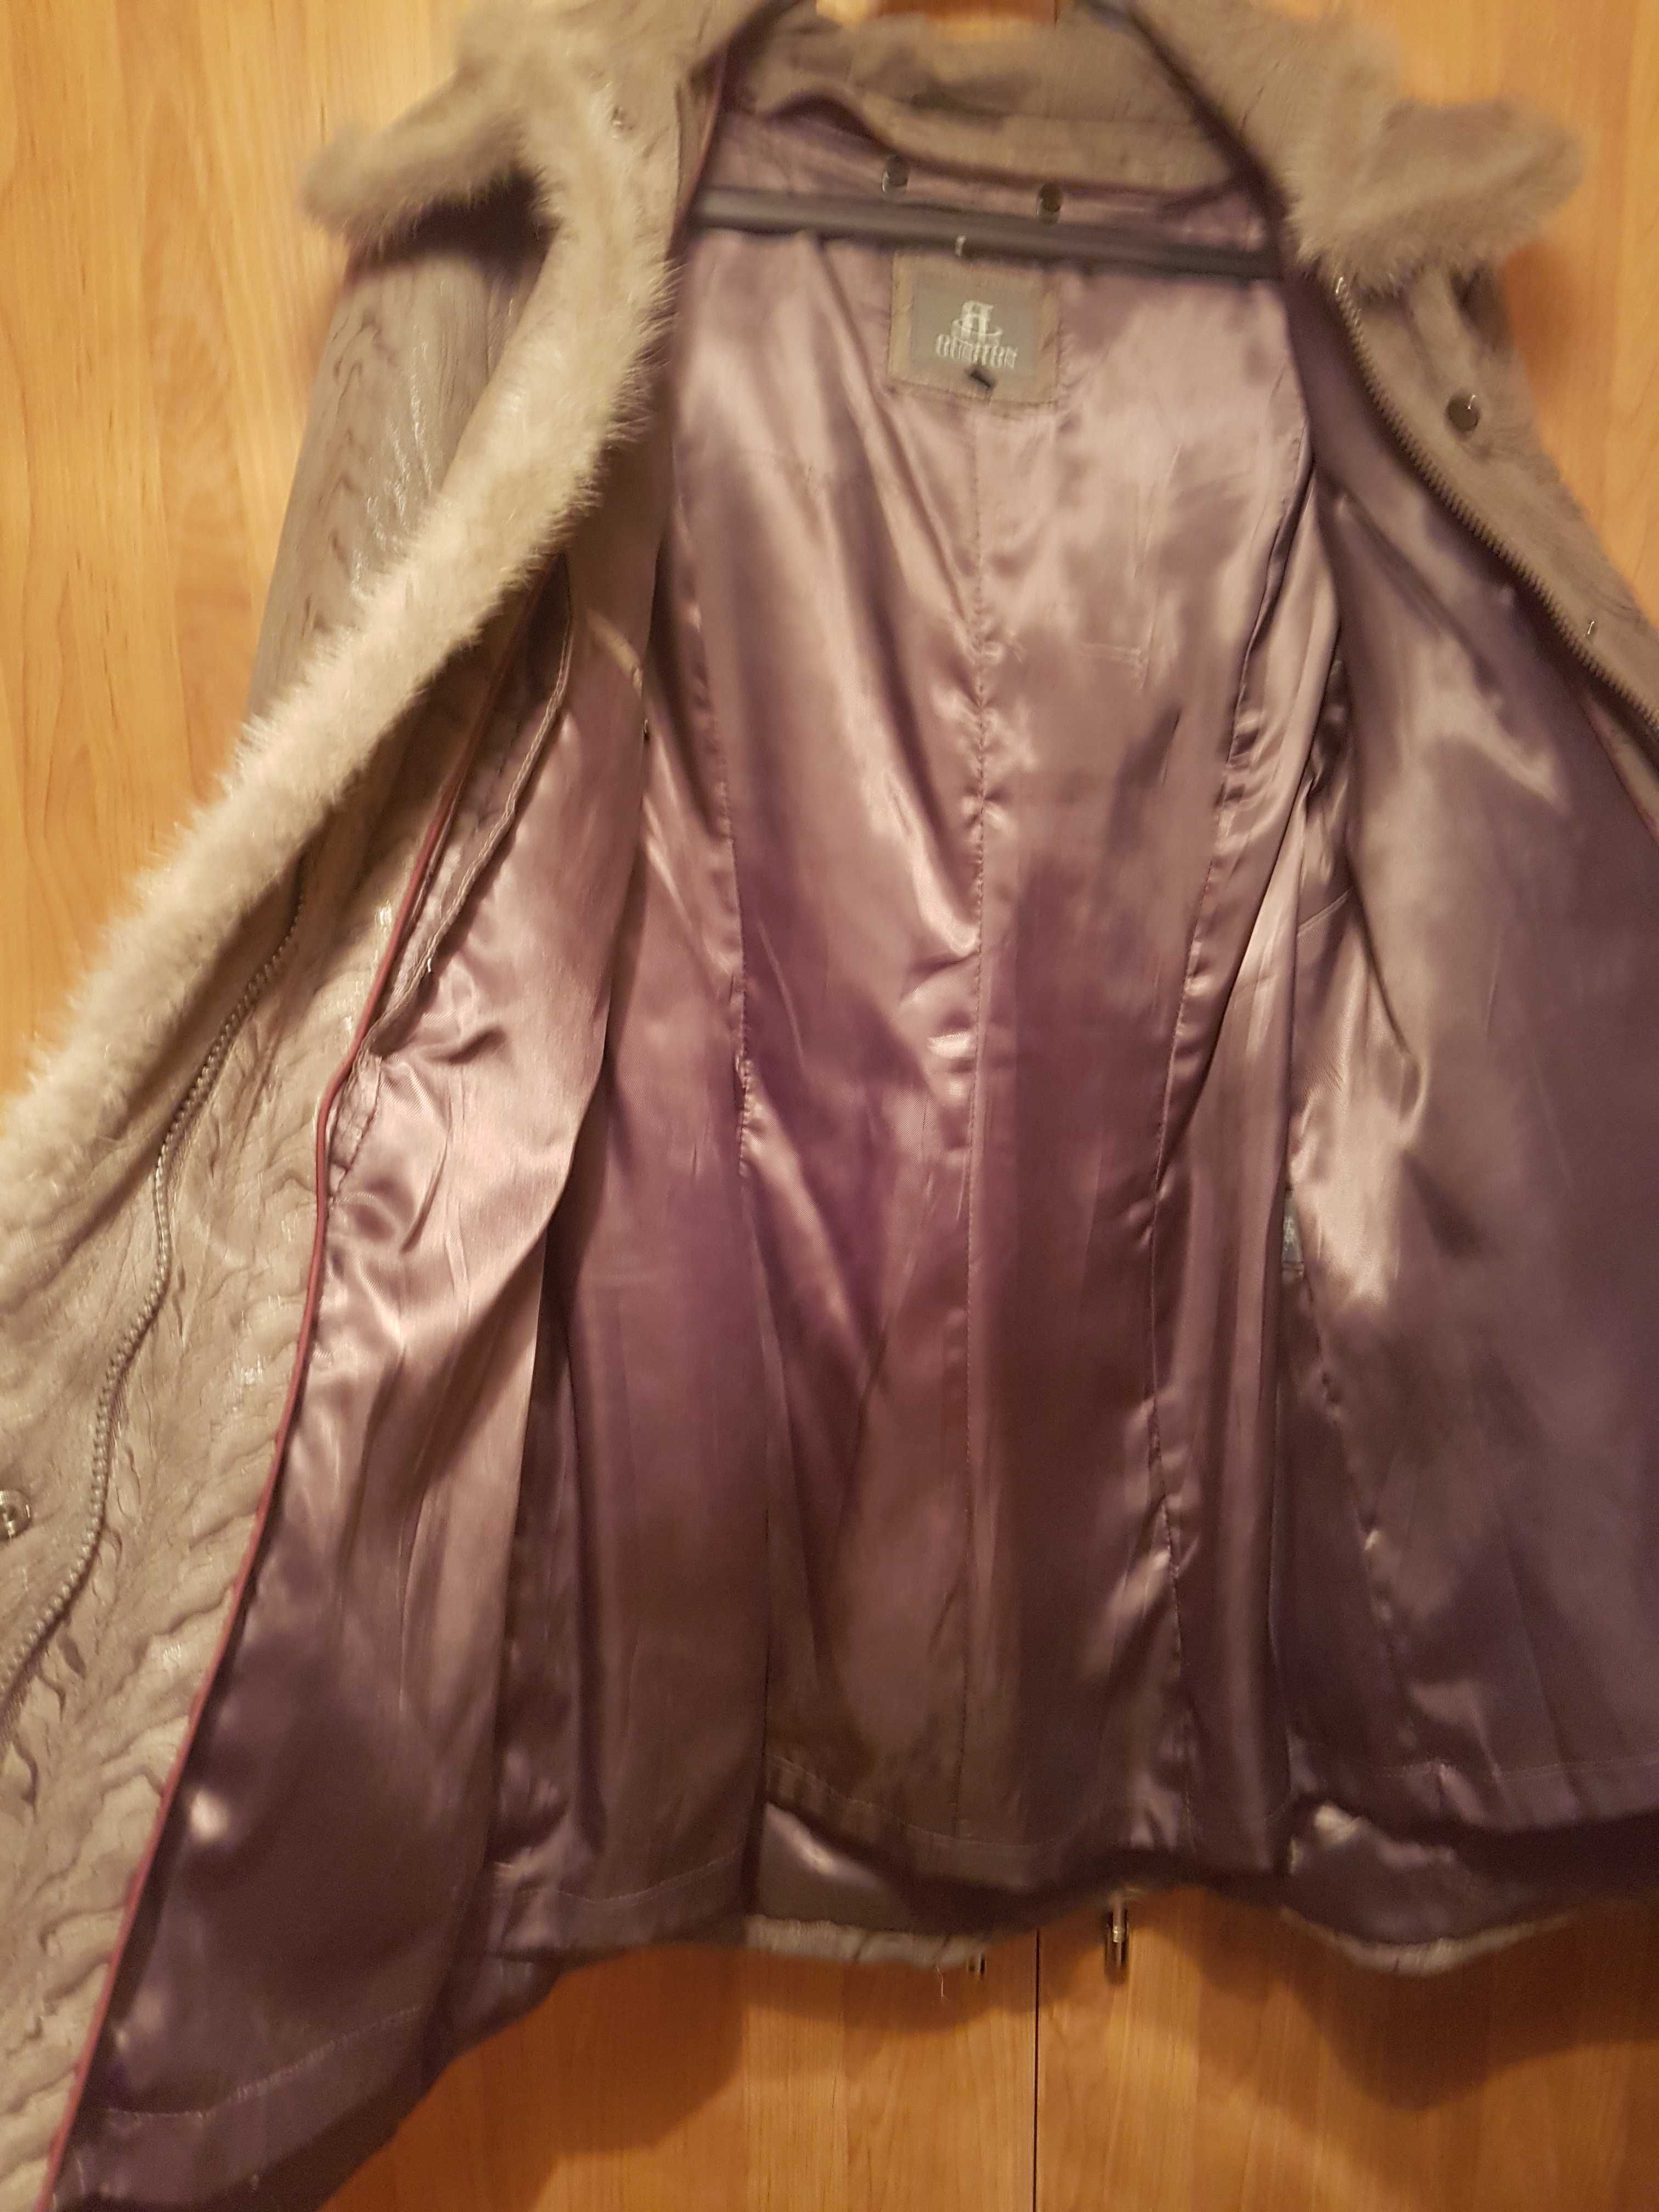 Зимняя женская куртка-пальто